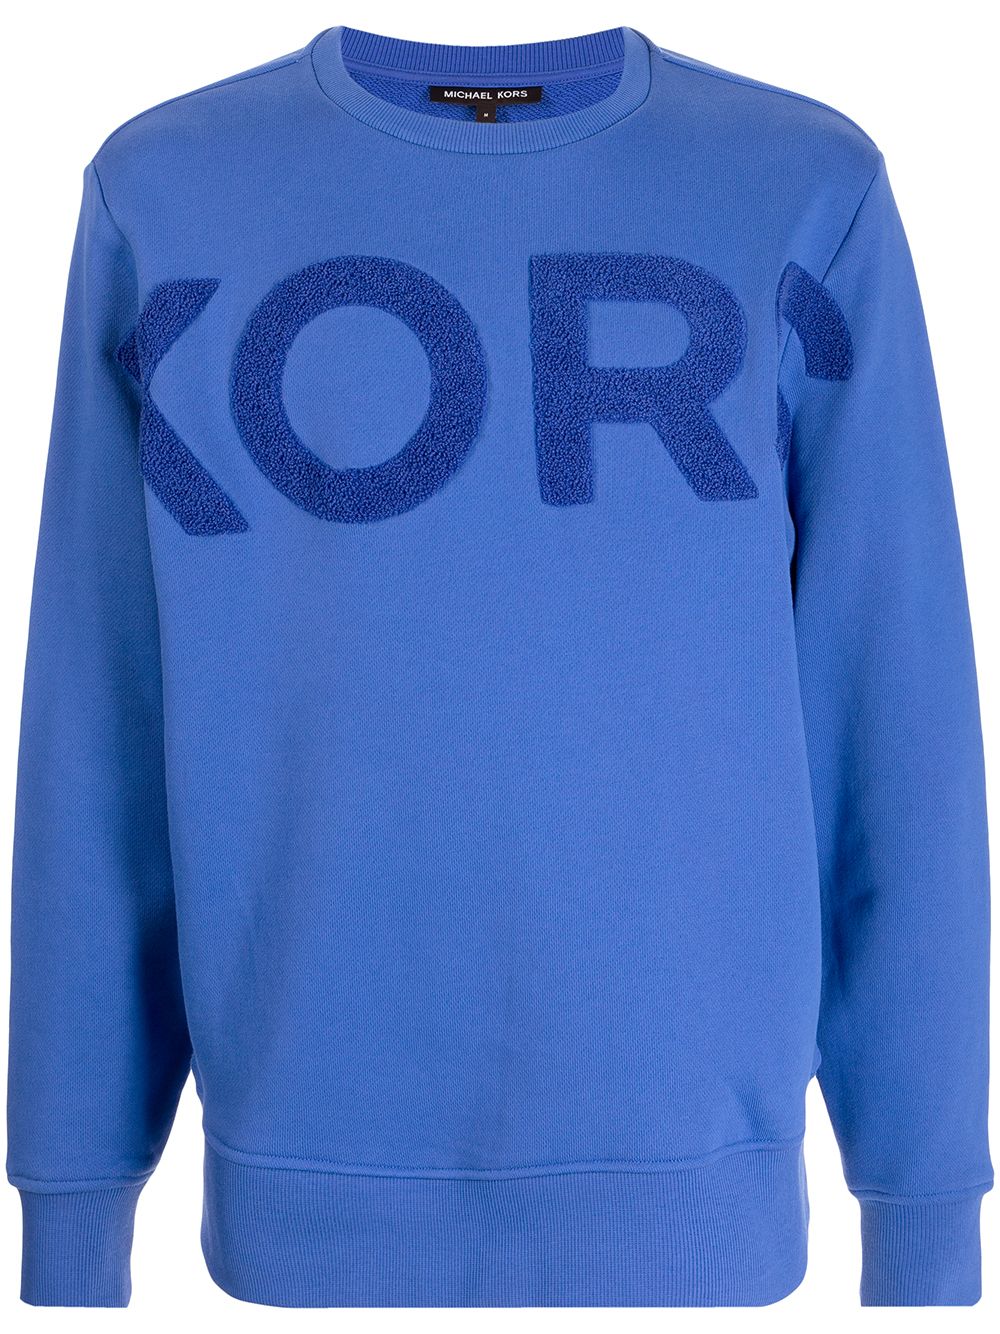 Michael Kors Oversized Crewneck Sweatshirt - Farfetch